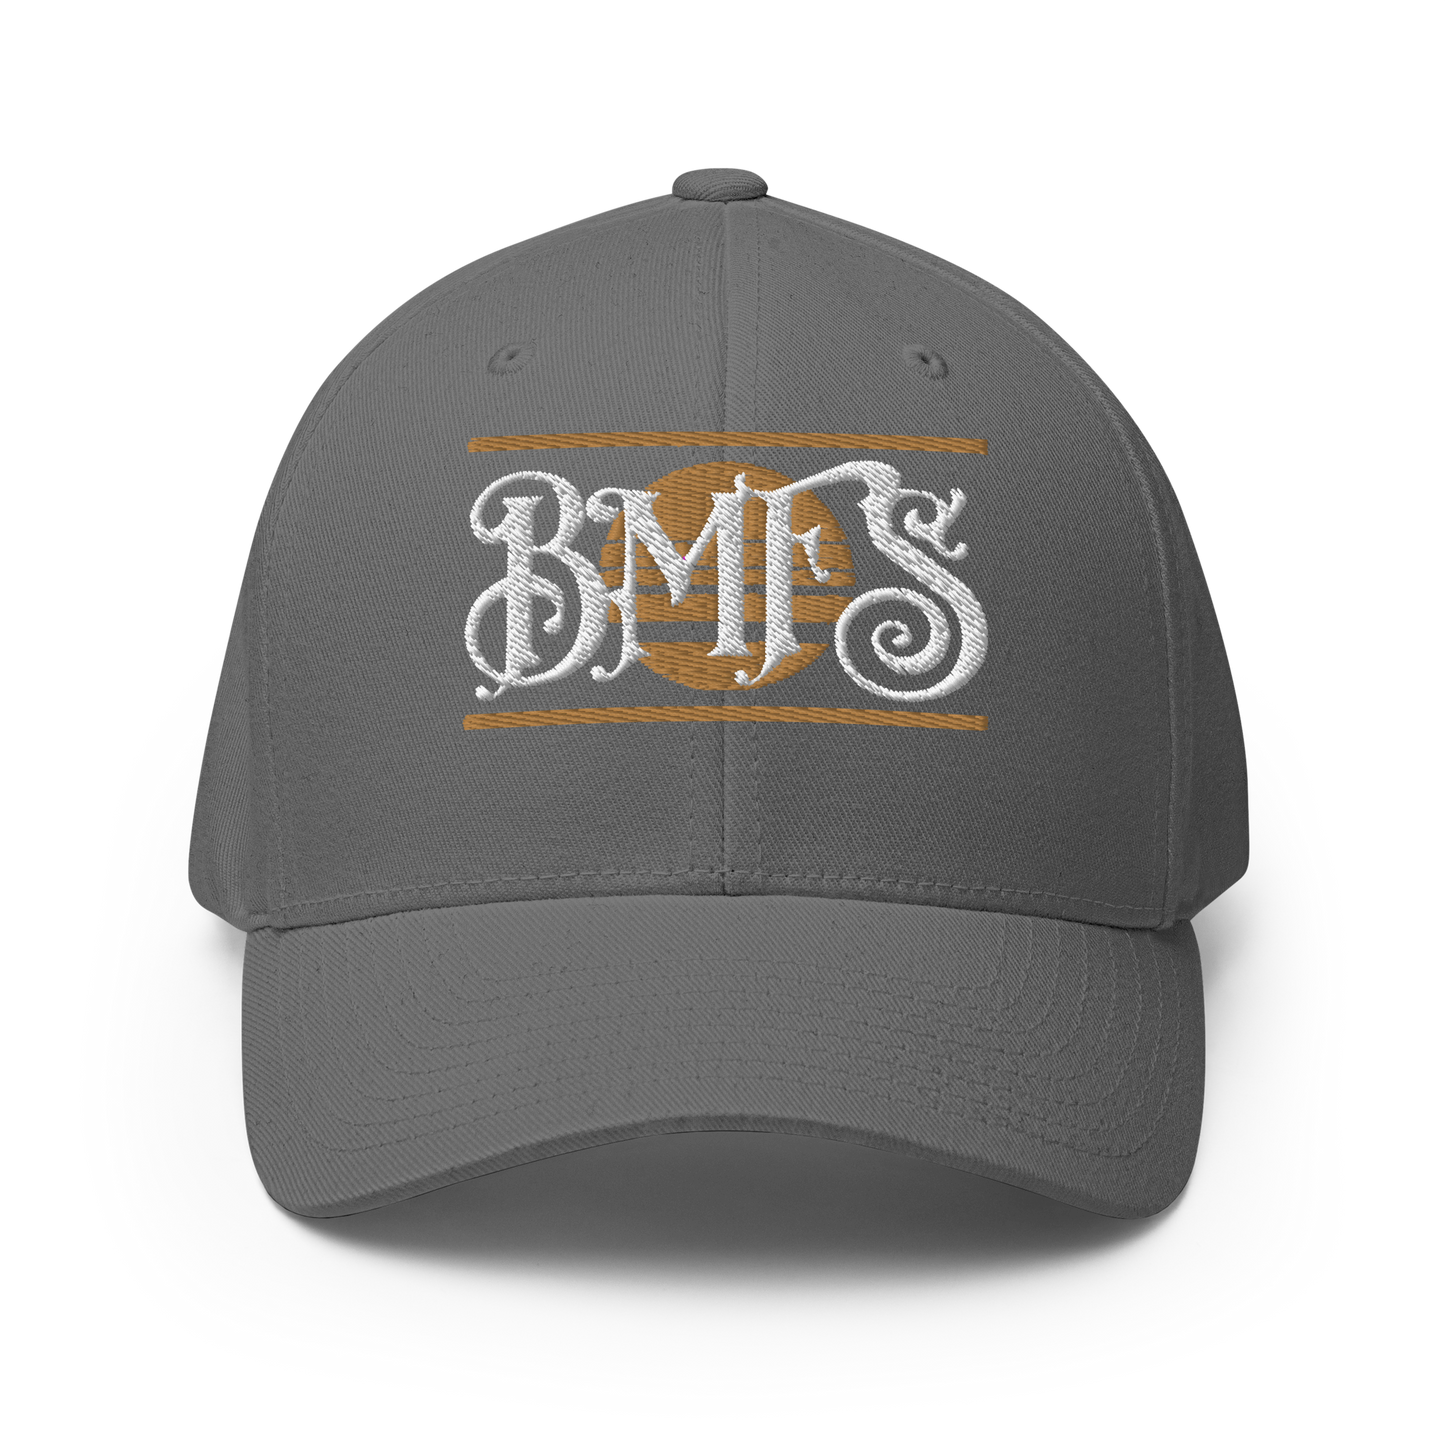 BMFS Sun FlexFit Structured Twill Cap | BMFS 33 Inspired Cap